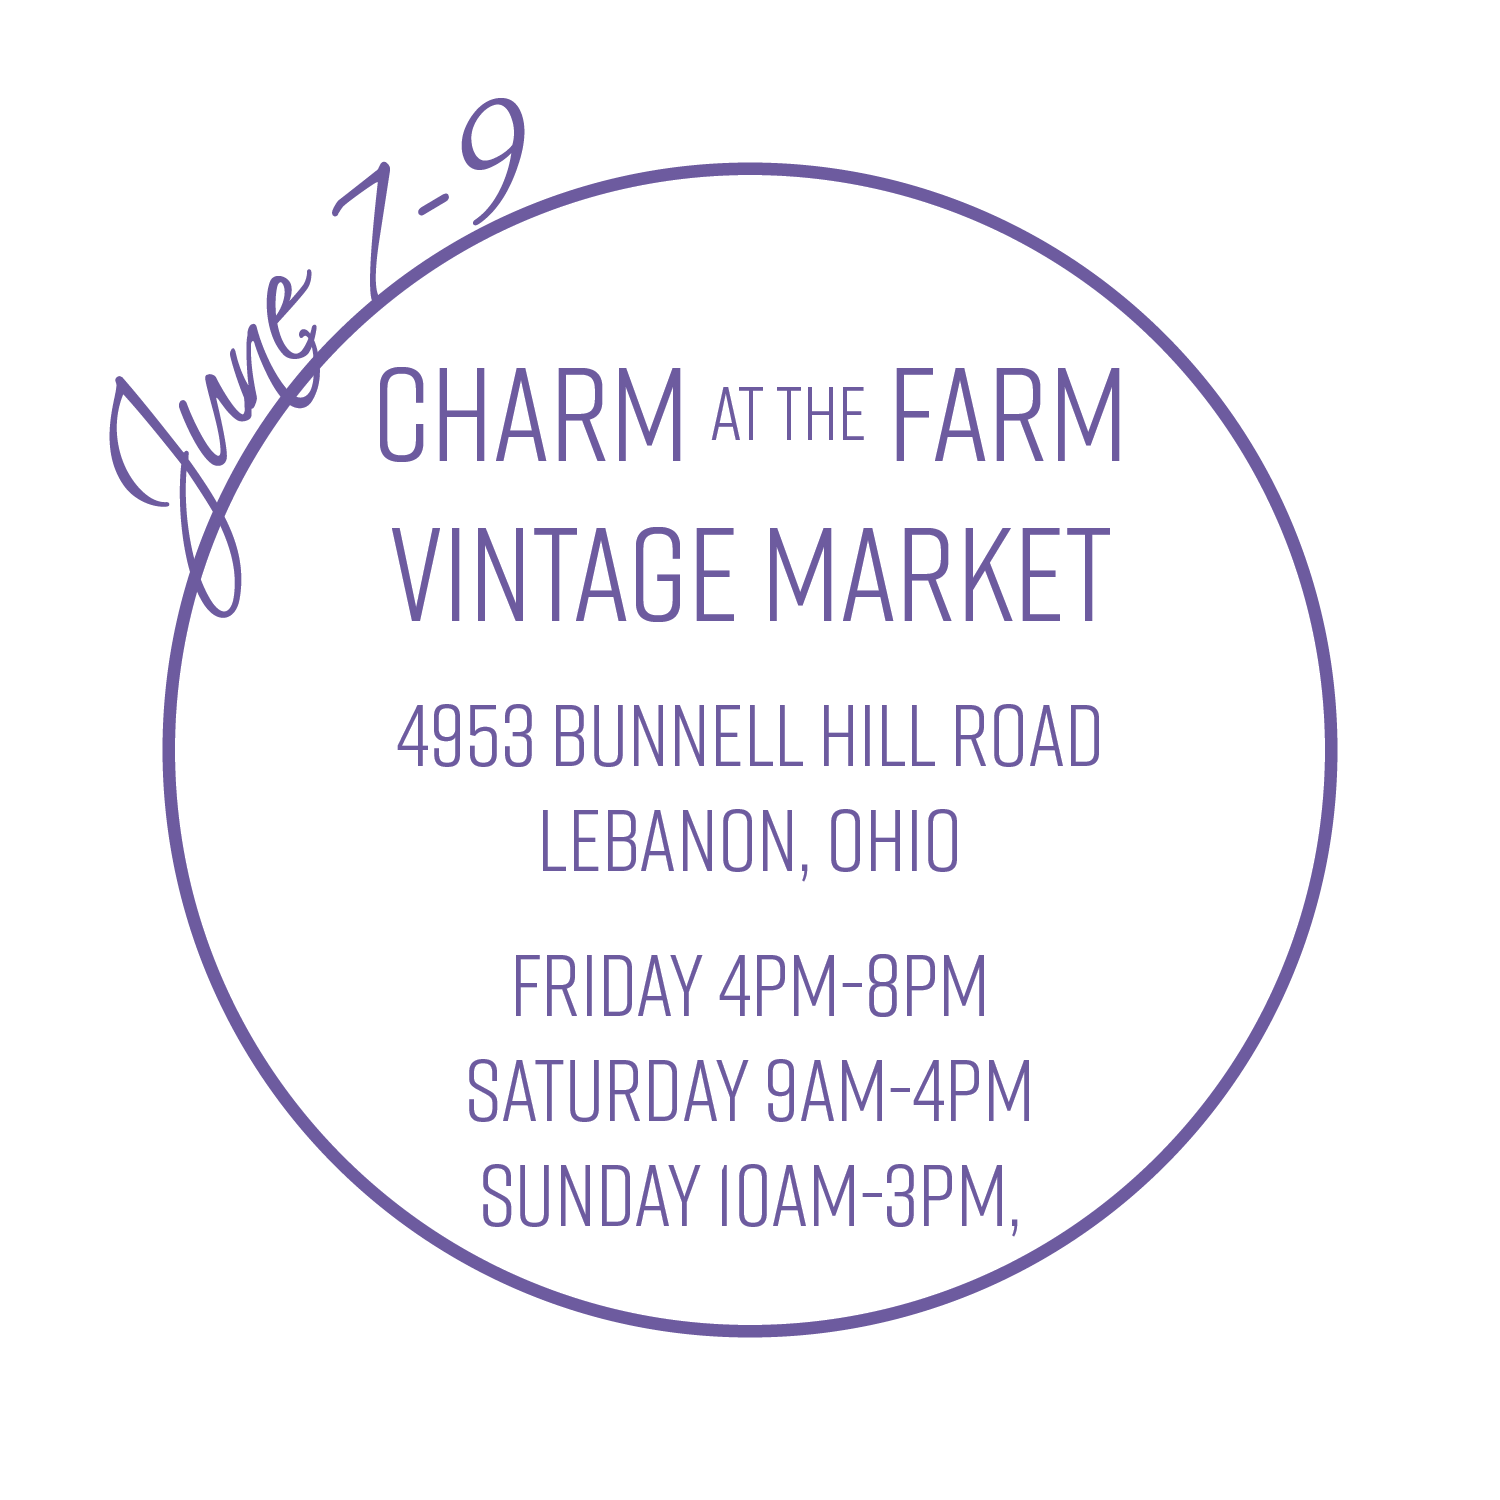 Charm at the Farm Vintage Market